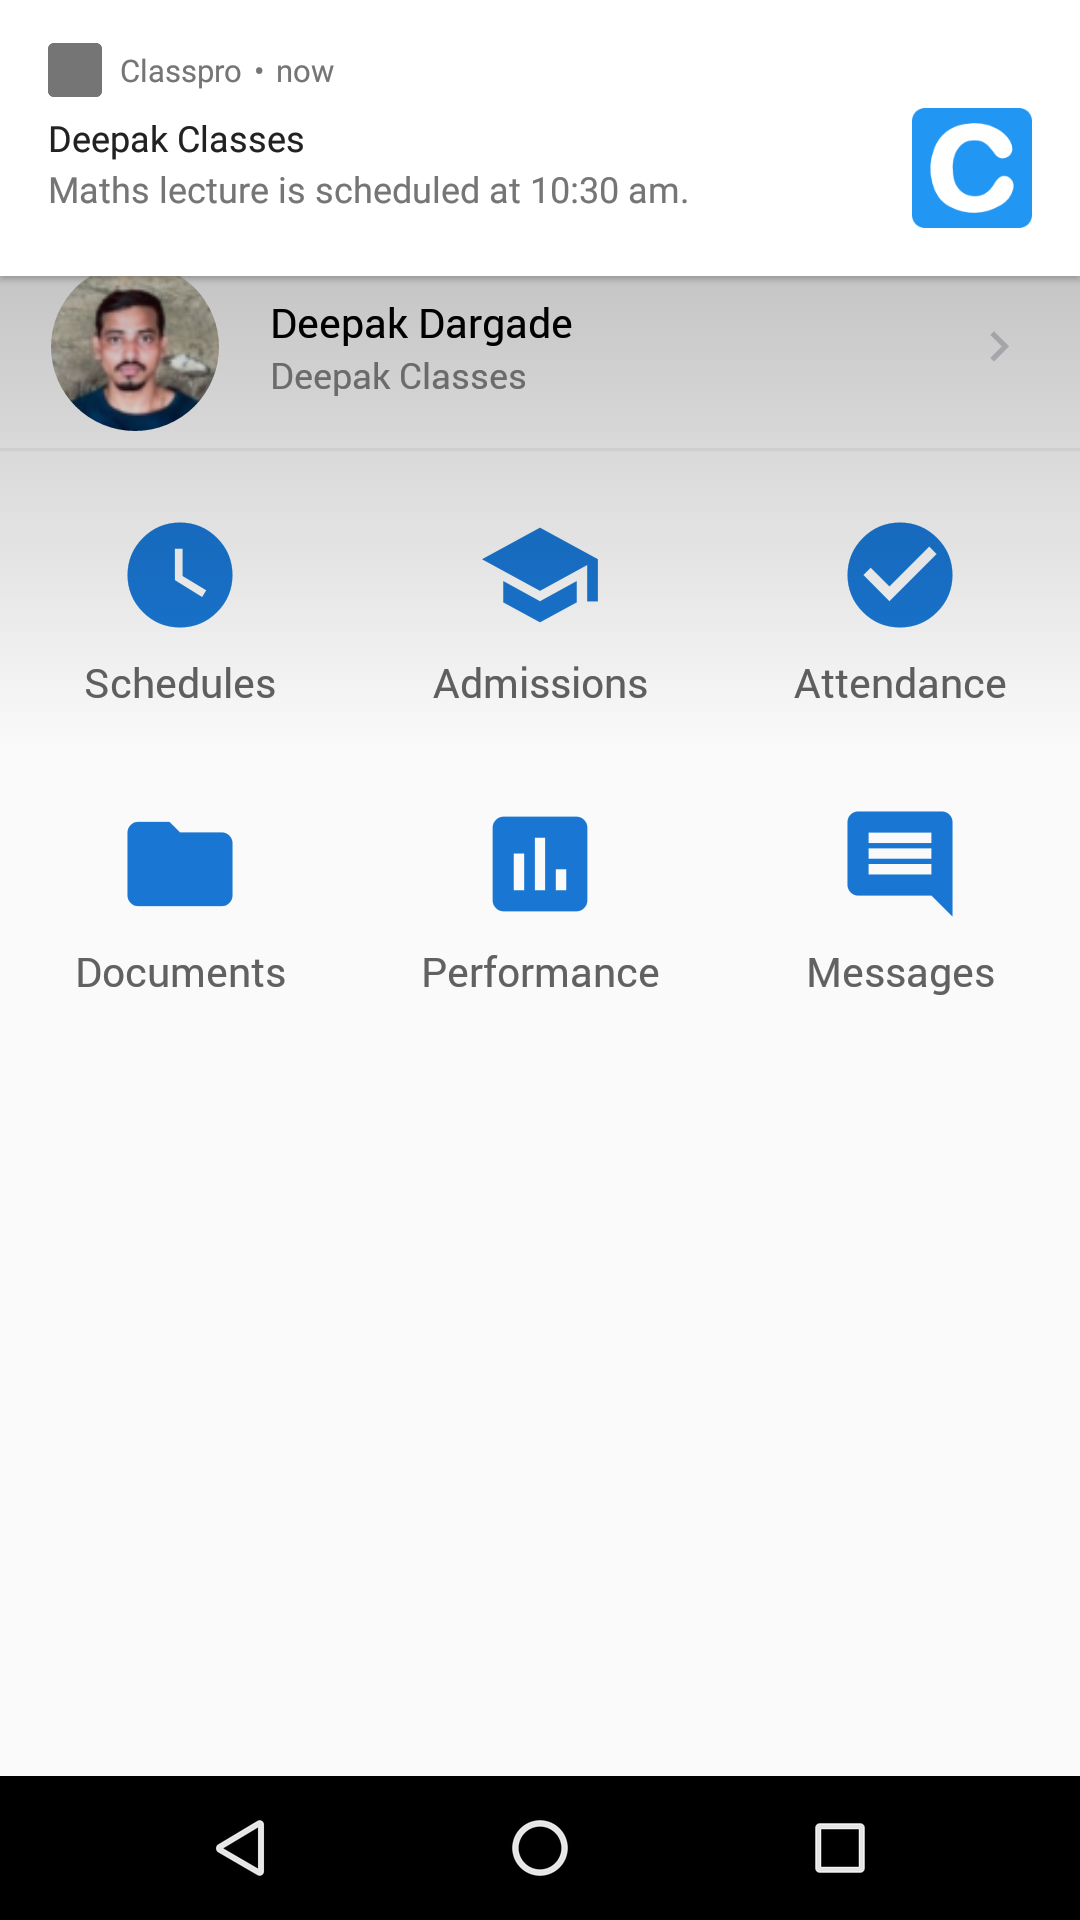 Classpro app notifications